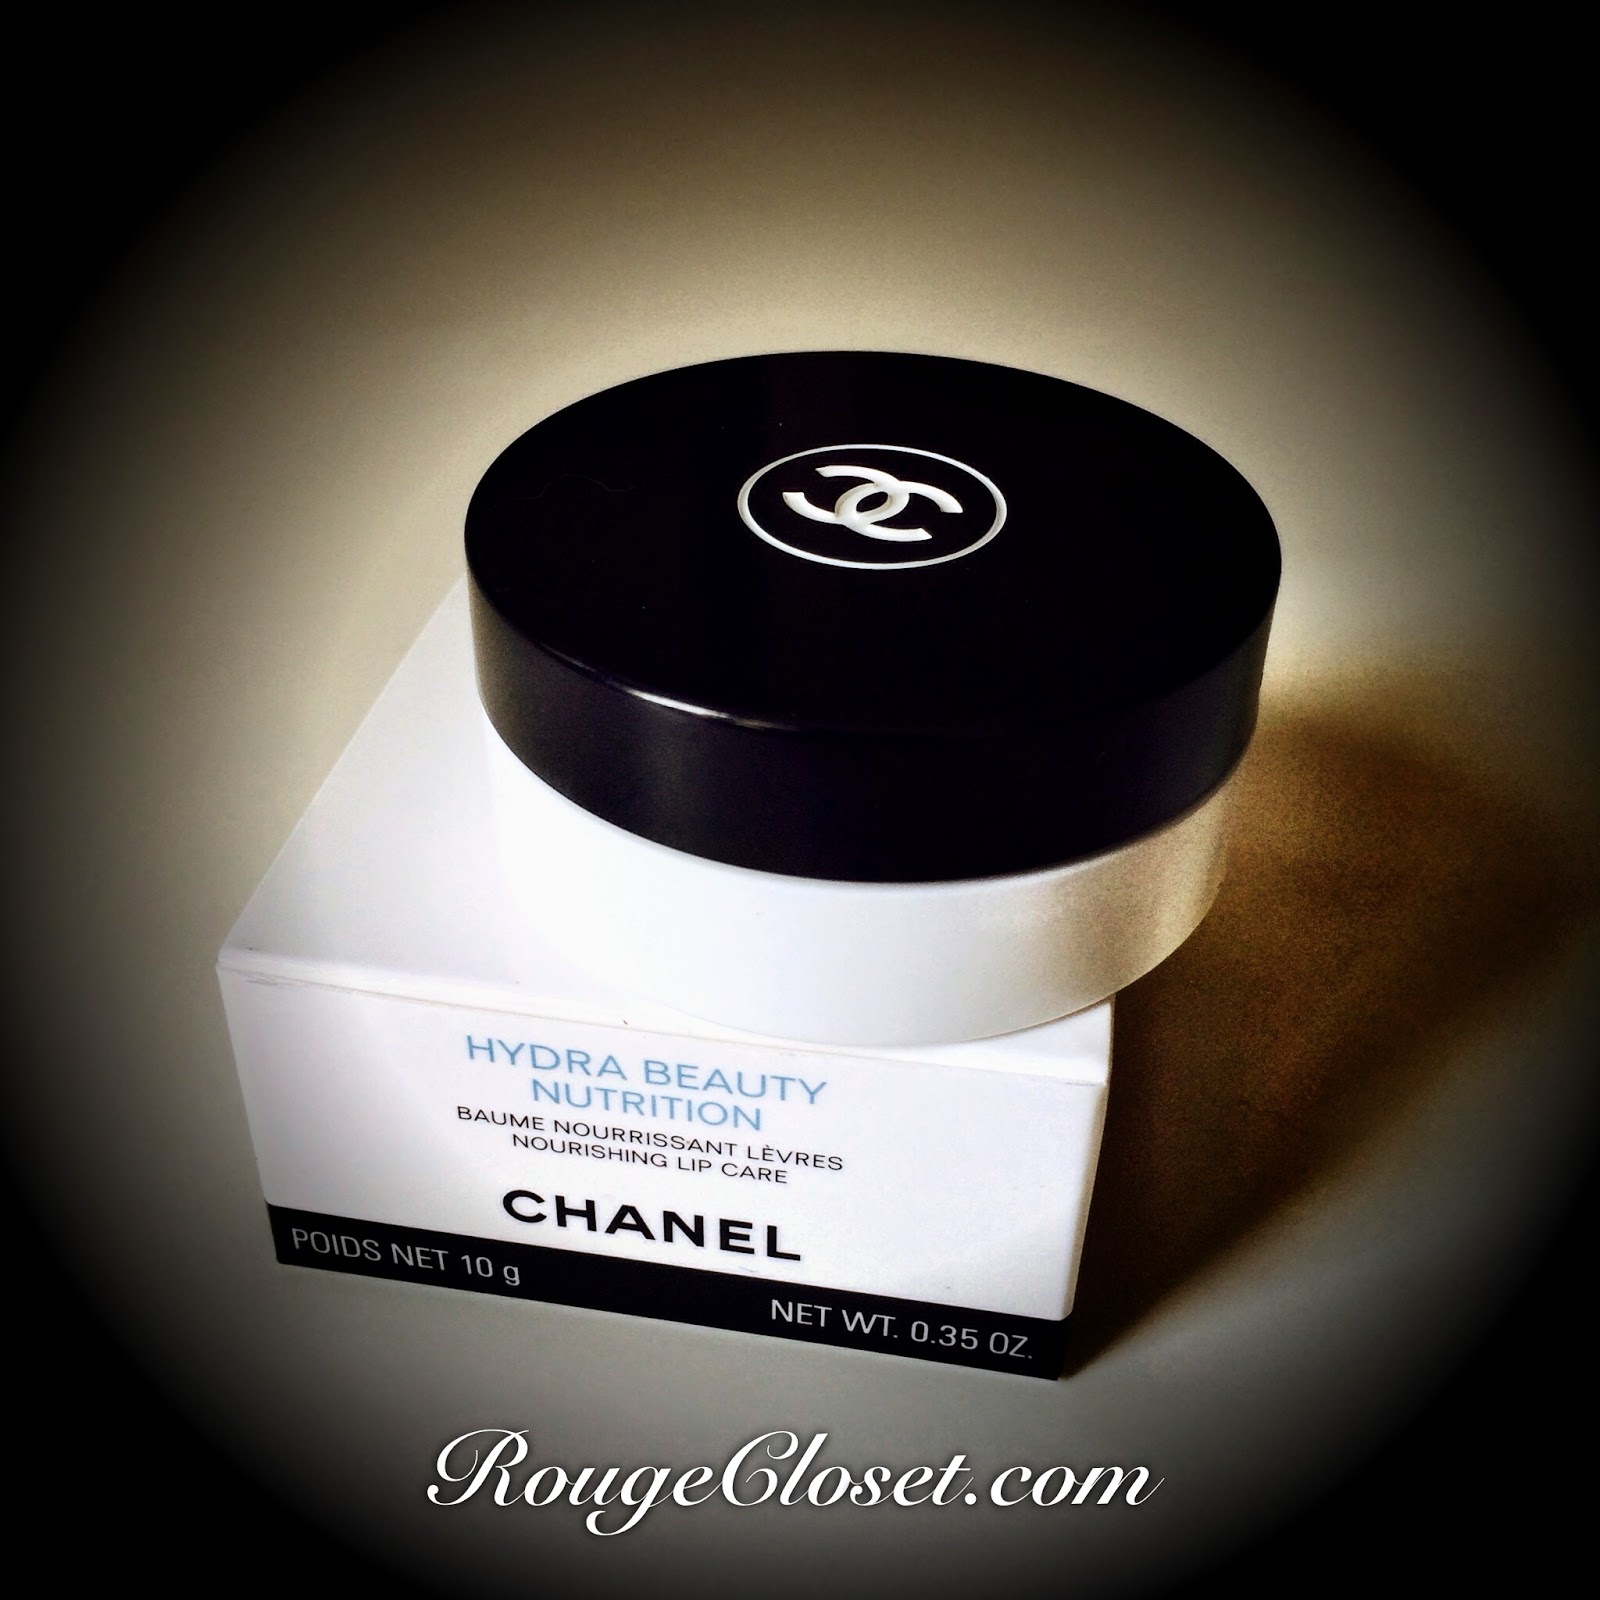 Chanel hydra beauty lip конопли в домашних условиях видео